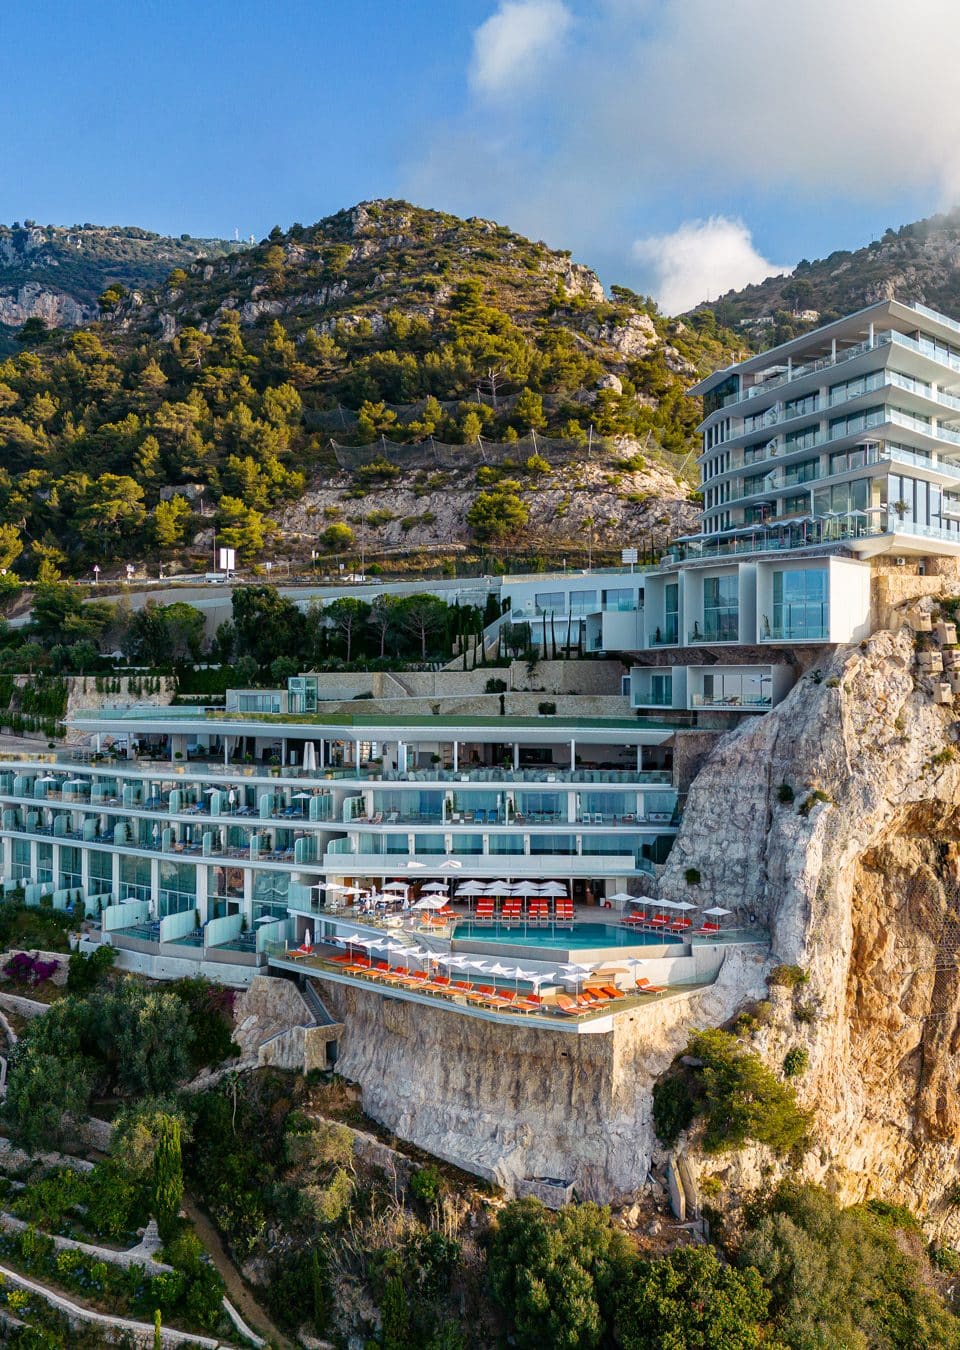 Luxury Travel Guru Melissa Biggs Bradley on 8 New Hotels Where the Design Rivals the Views